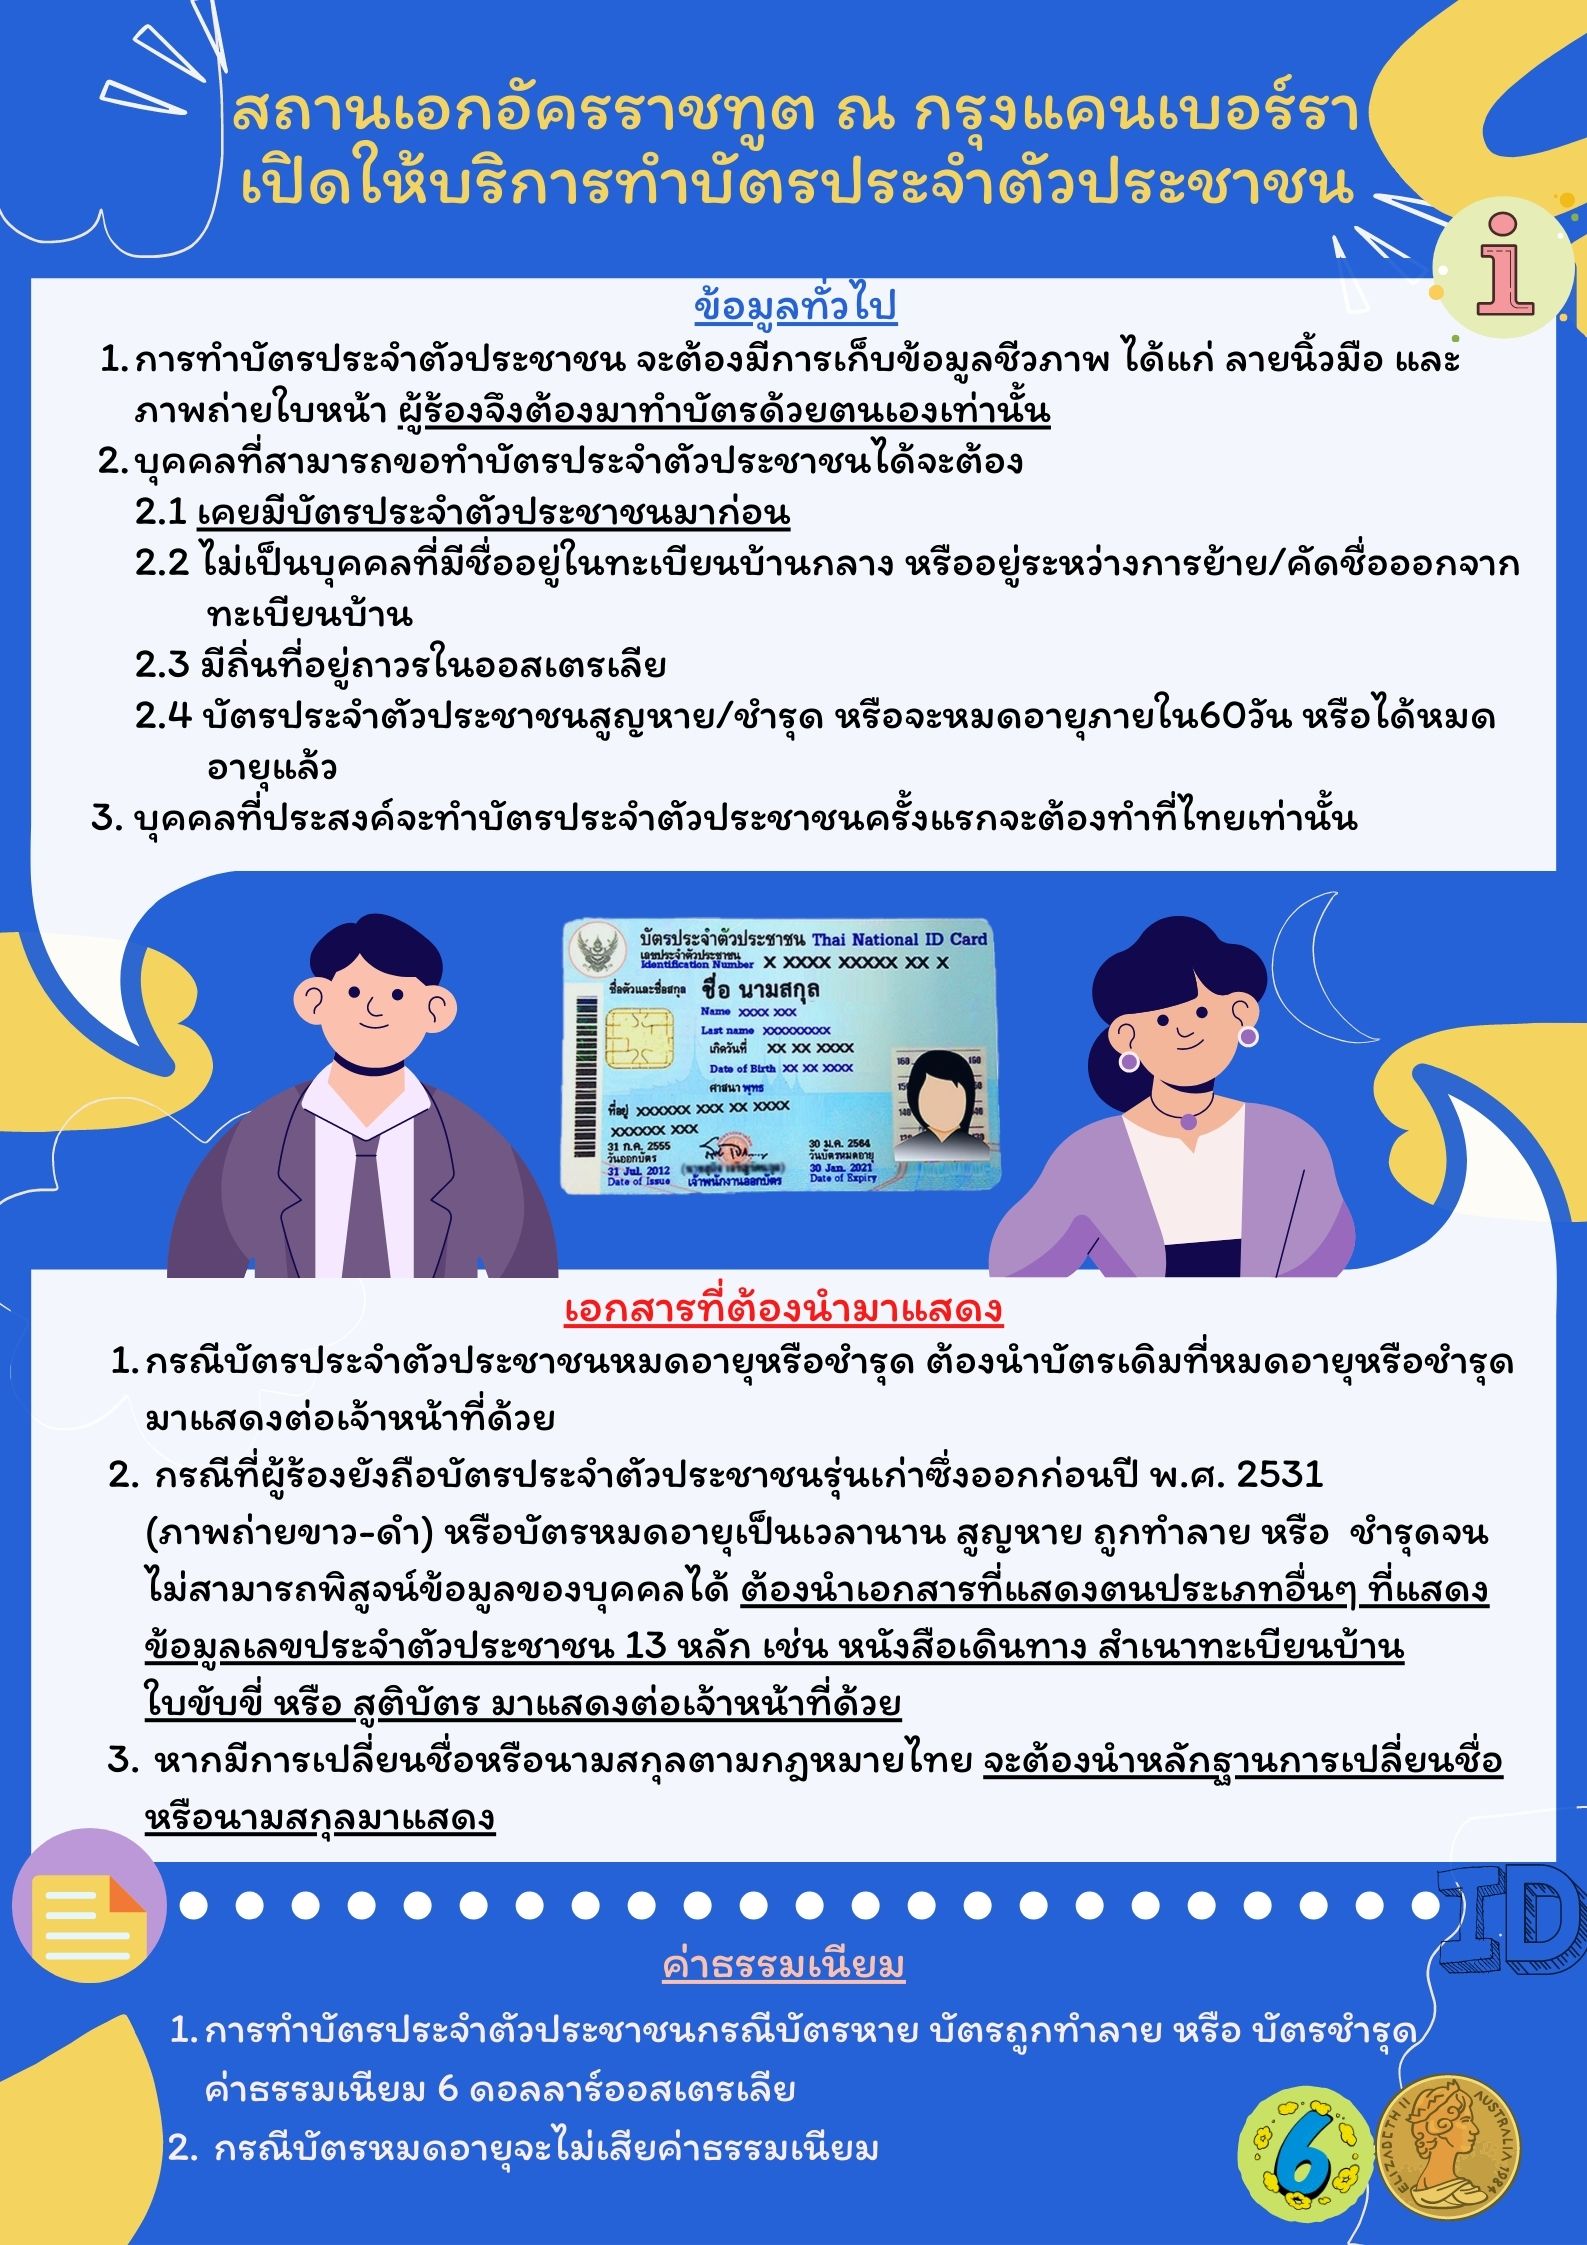 Thai Identity Card - Royal Thai Embassy Canberra